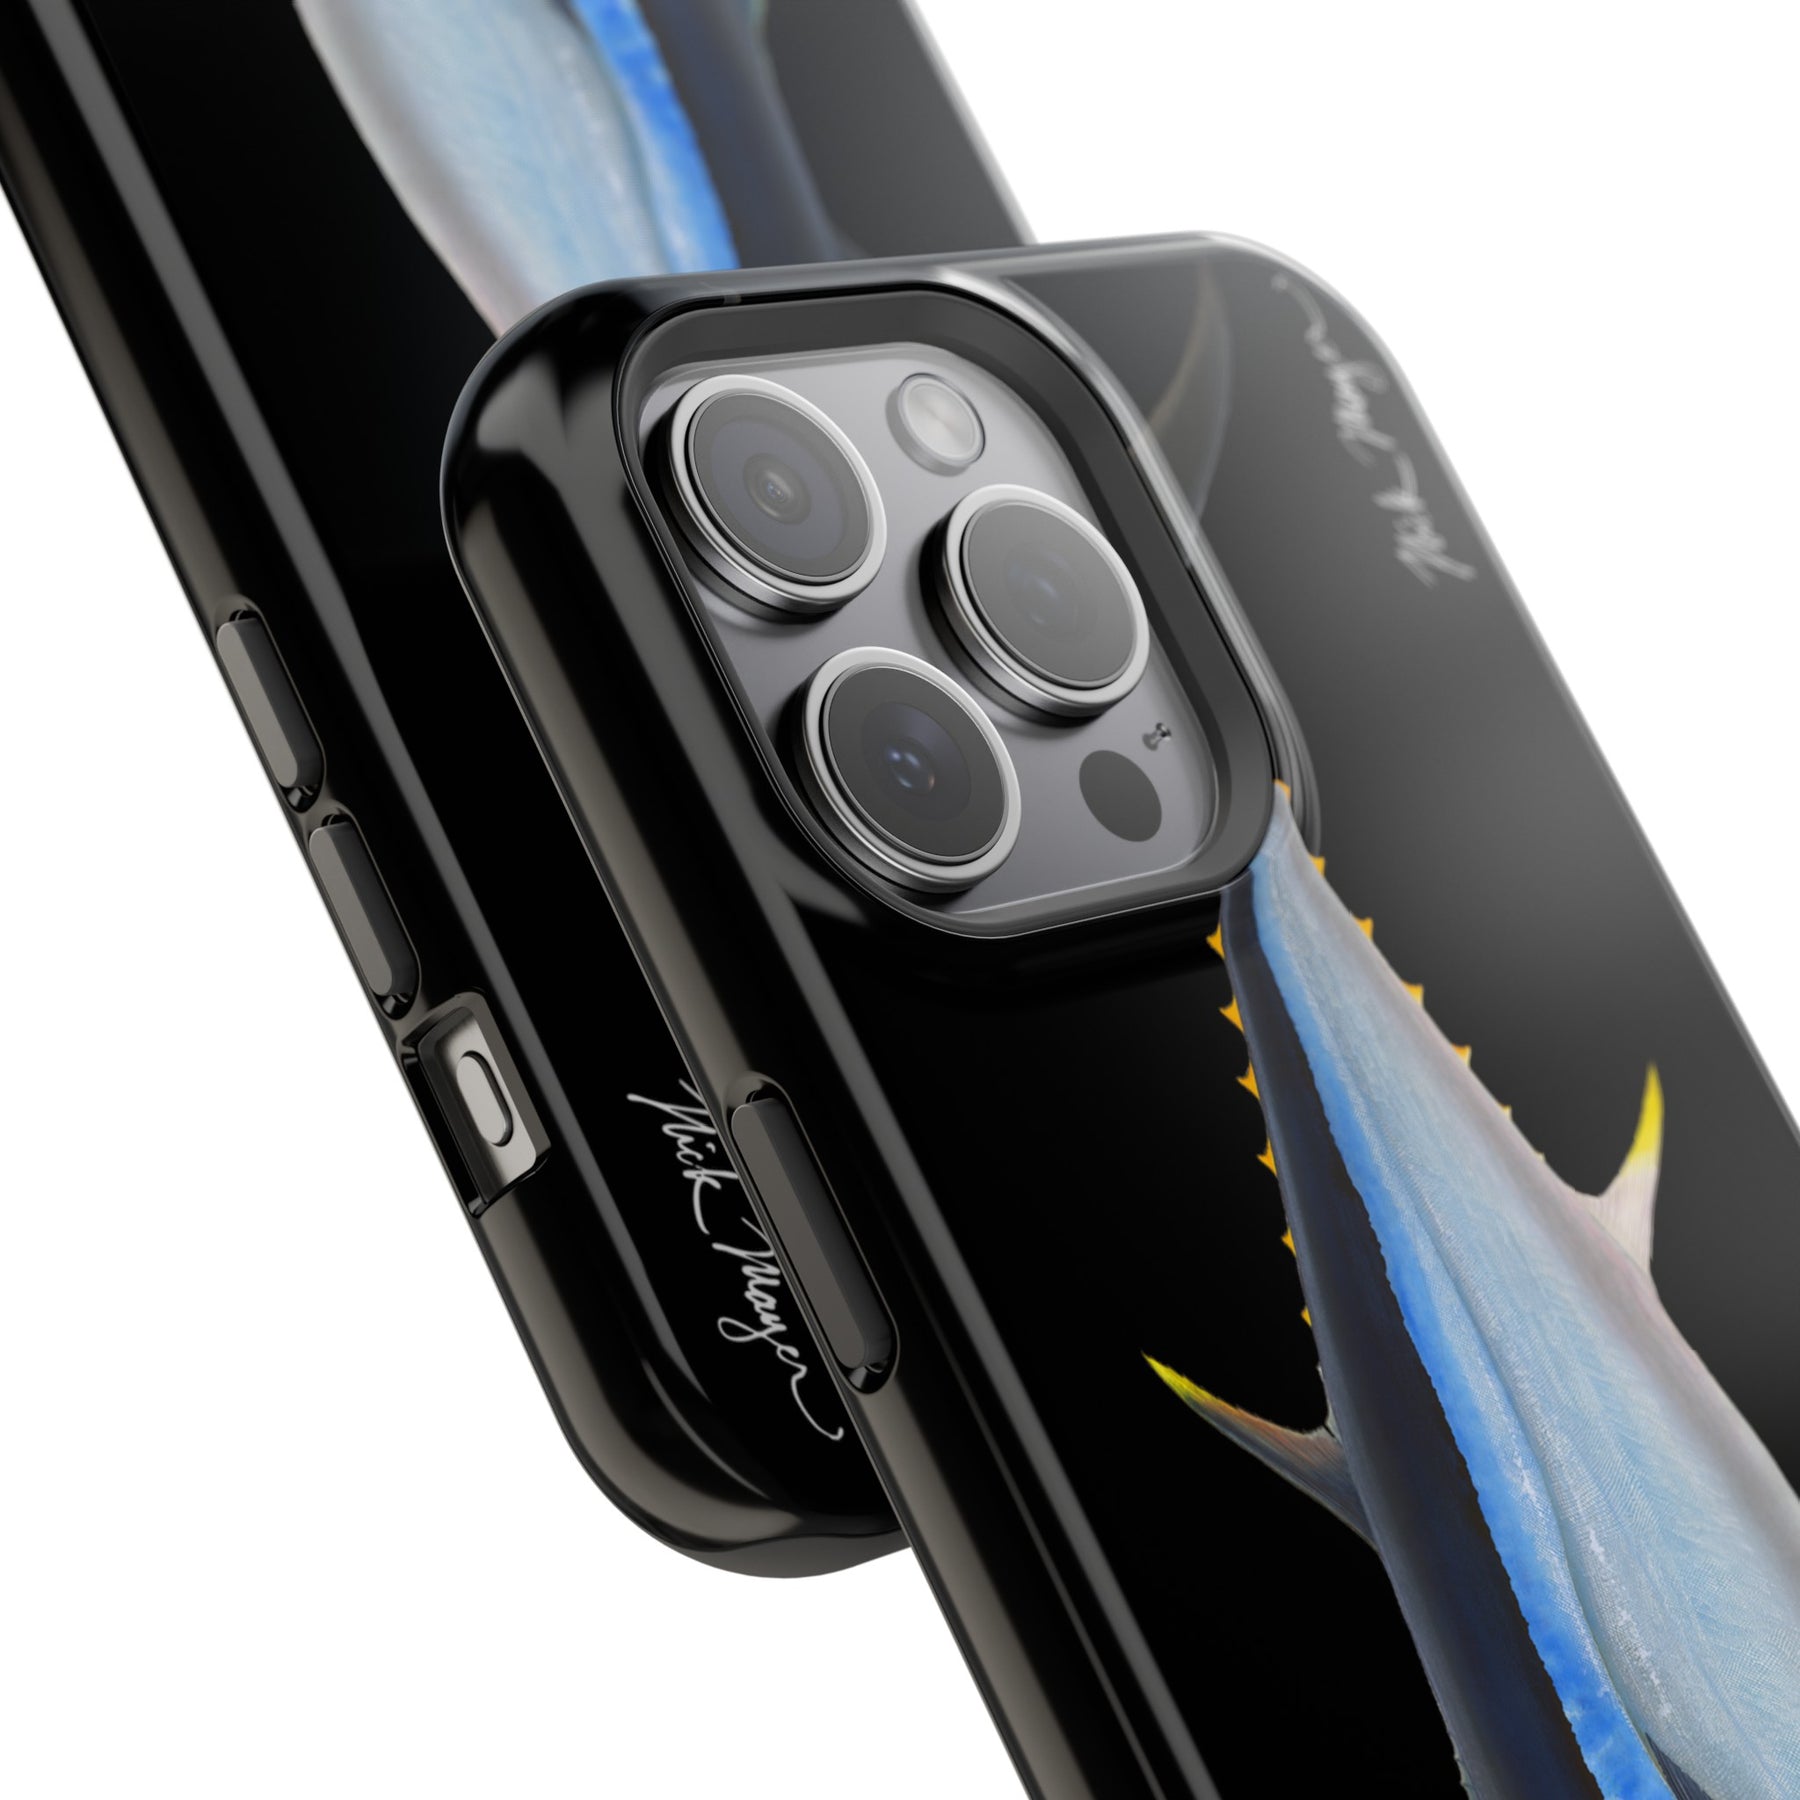 Giant Bluefin II MagSafe Black iPhone Case